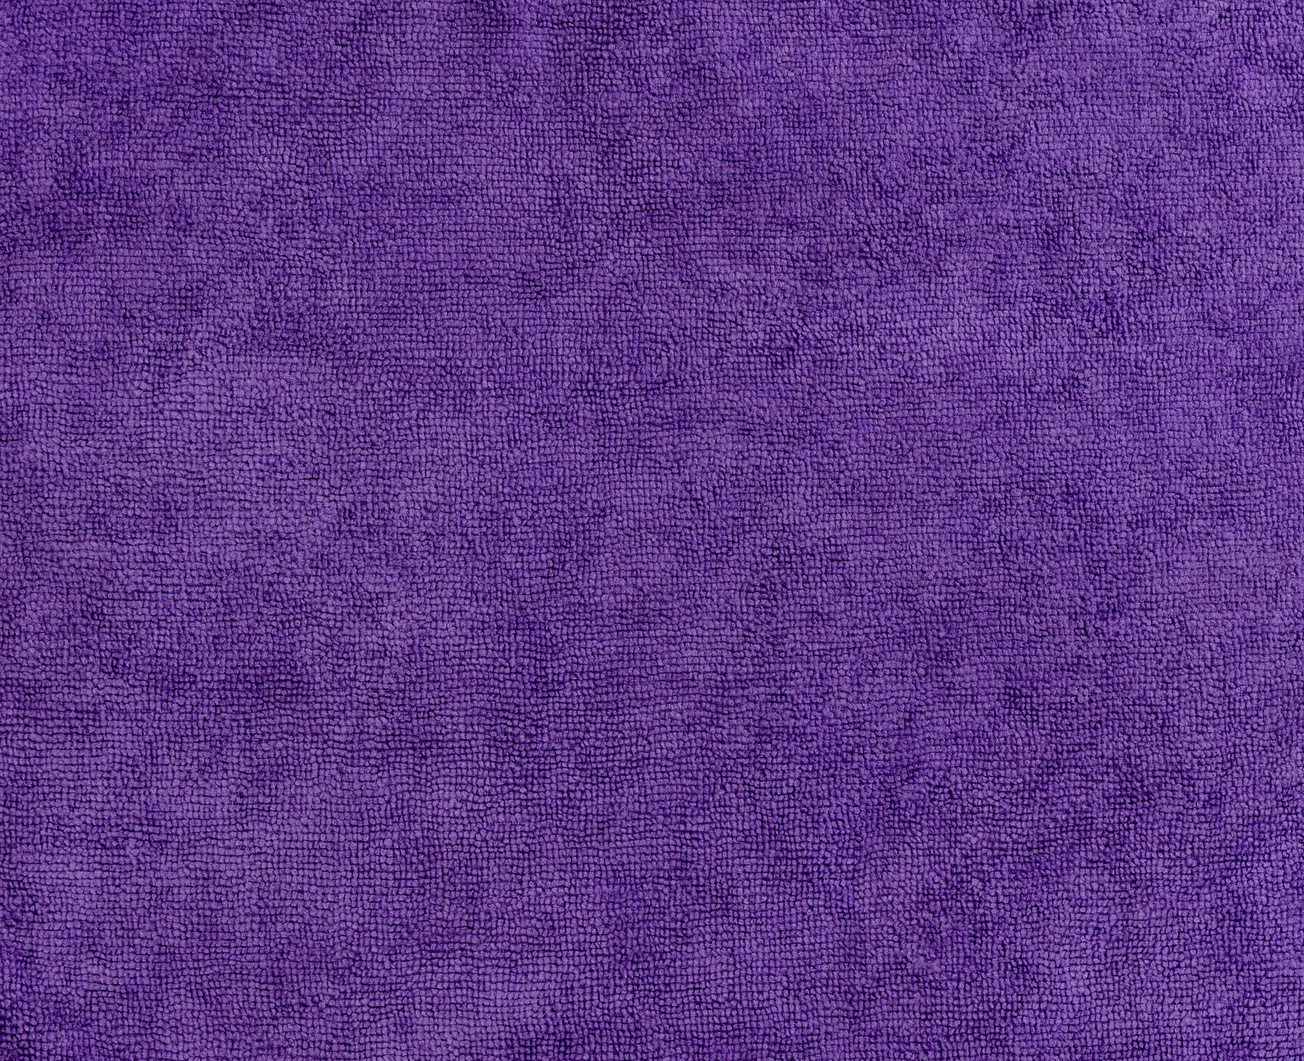 Textured Purple Cloth